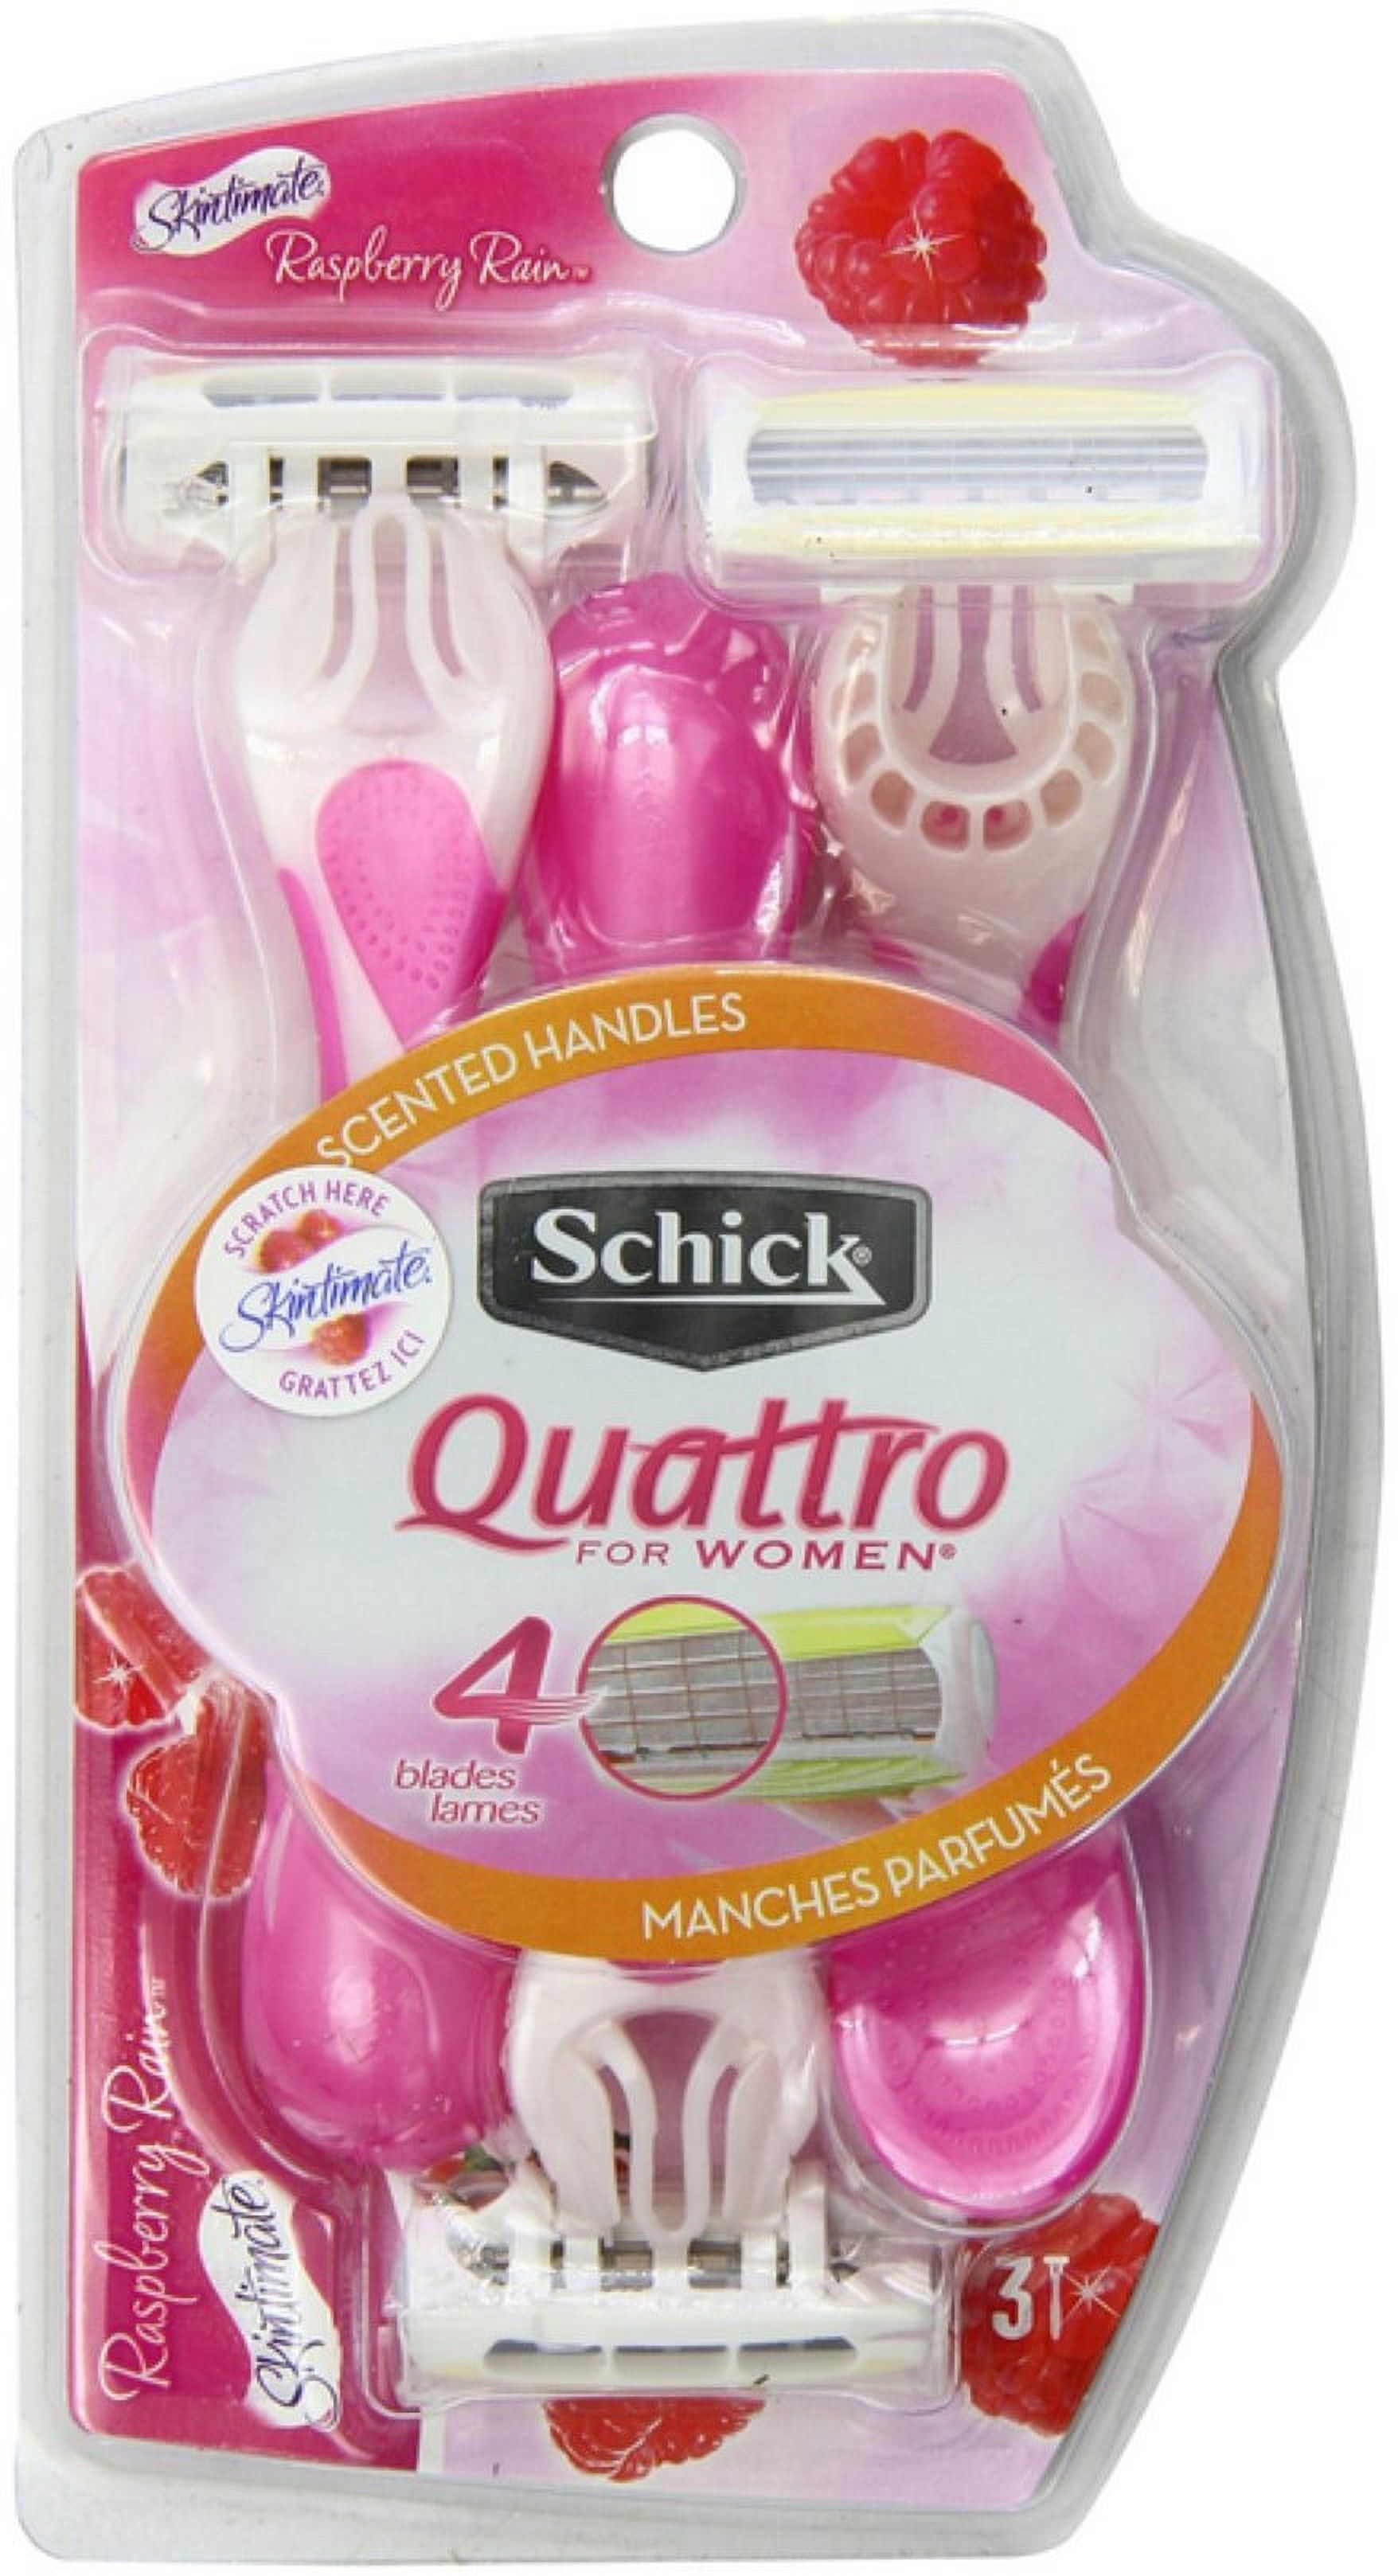 Schick Quattro for Women Disposable Razors Raspberry Rain - 3 ea - image 1 of 3